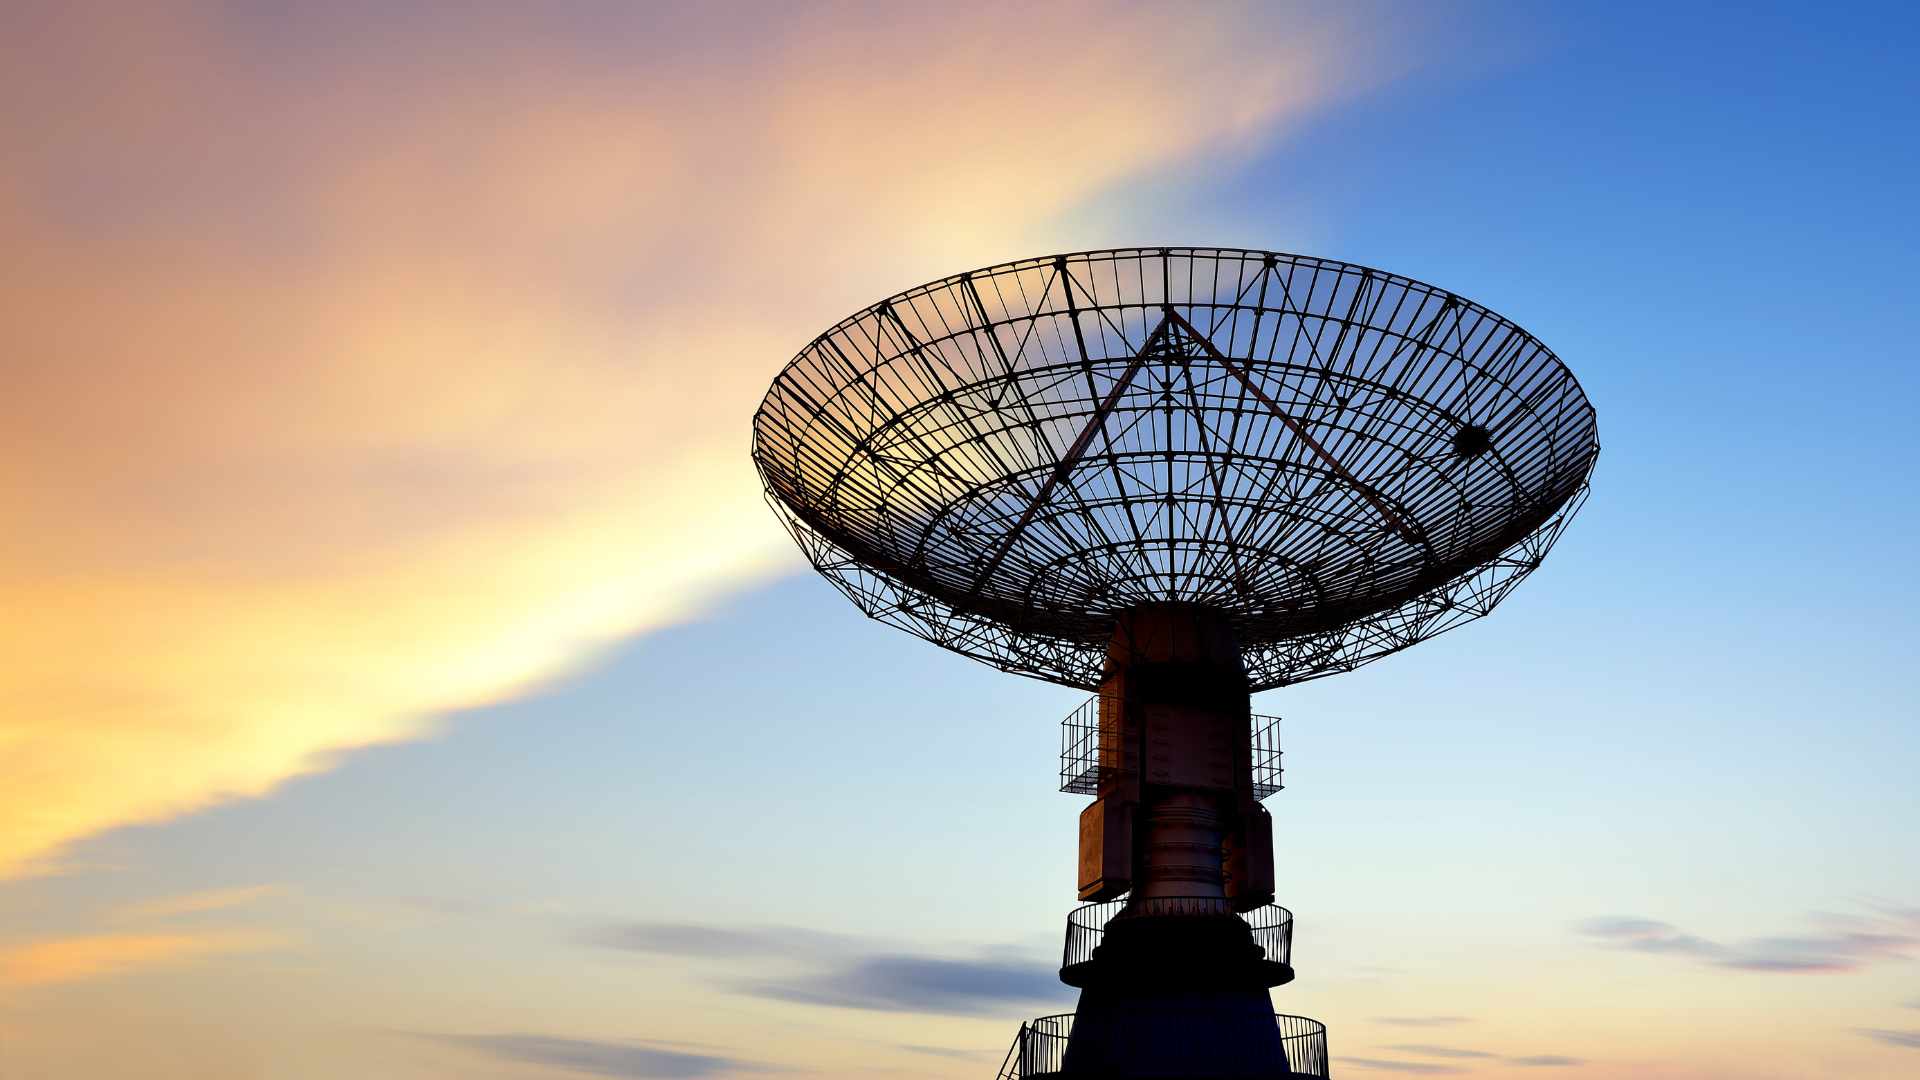 Satellite dish against sunset skies